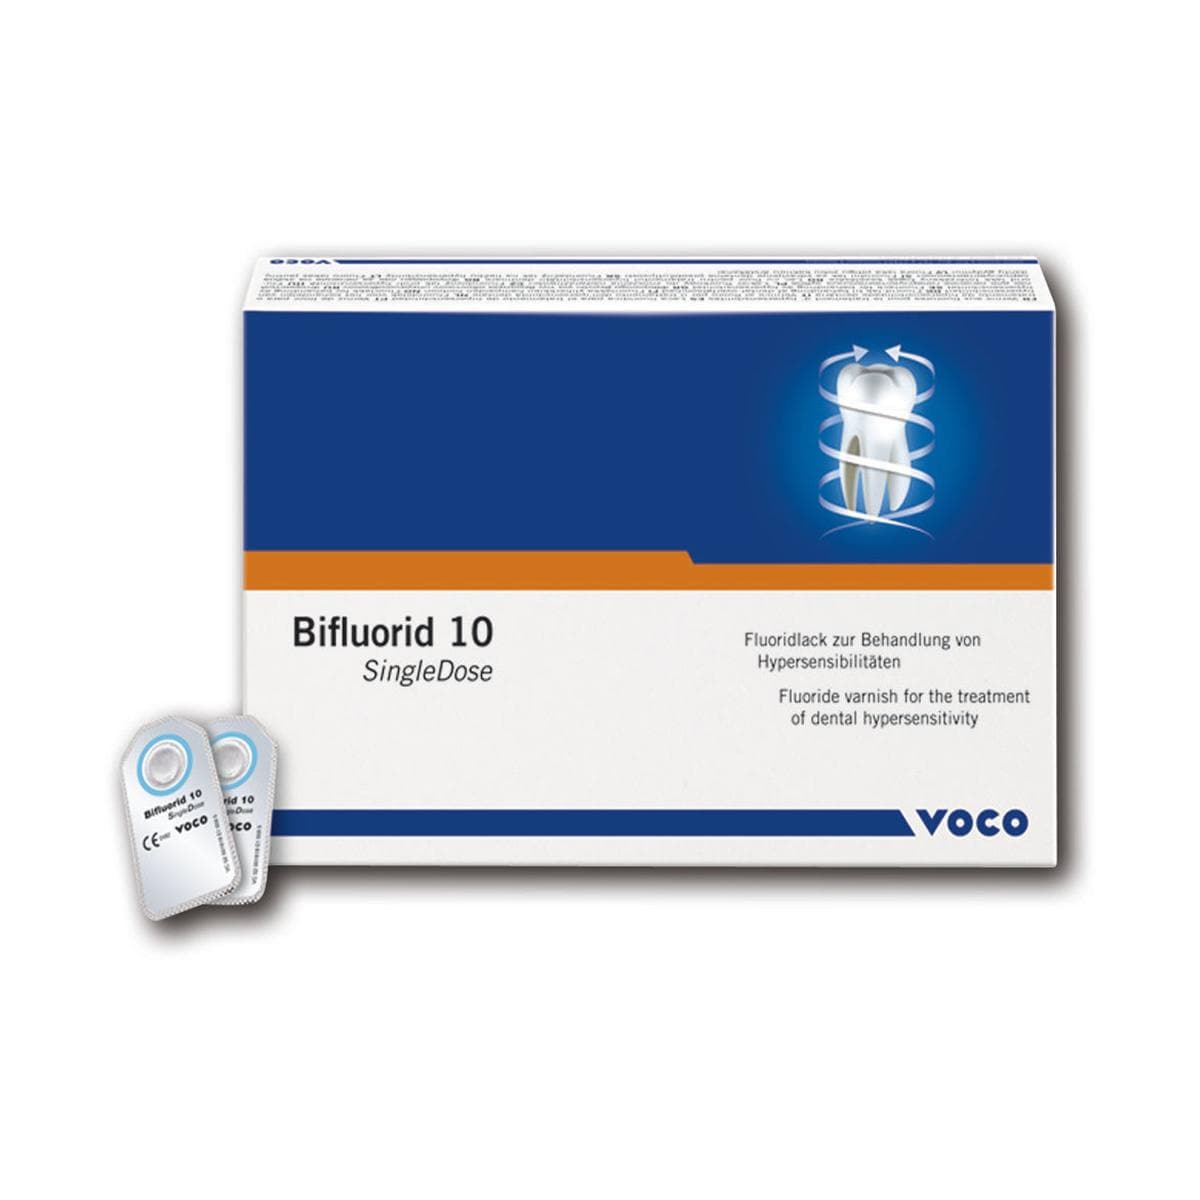 Bifluorid 10® SingleDose - Packung 50 SingleDose